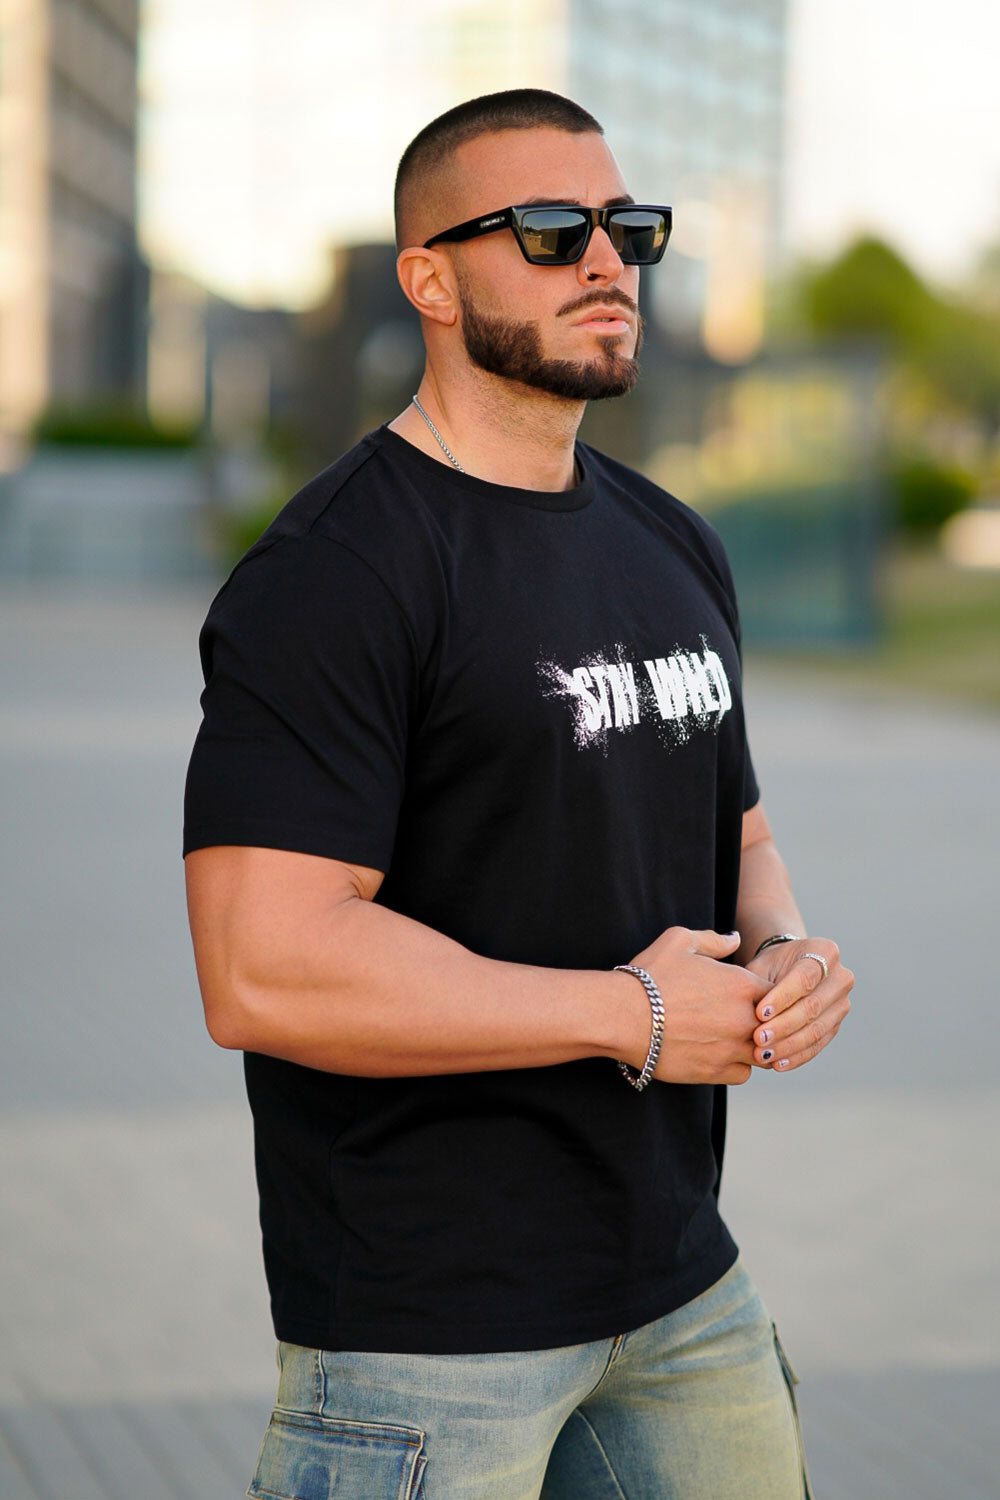 Gingtto Sleek and Simple: Men's Black Round Neck T-Shirt